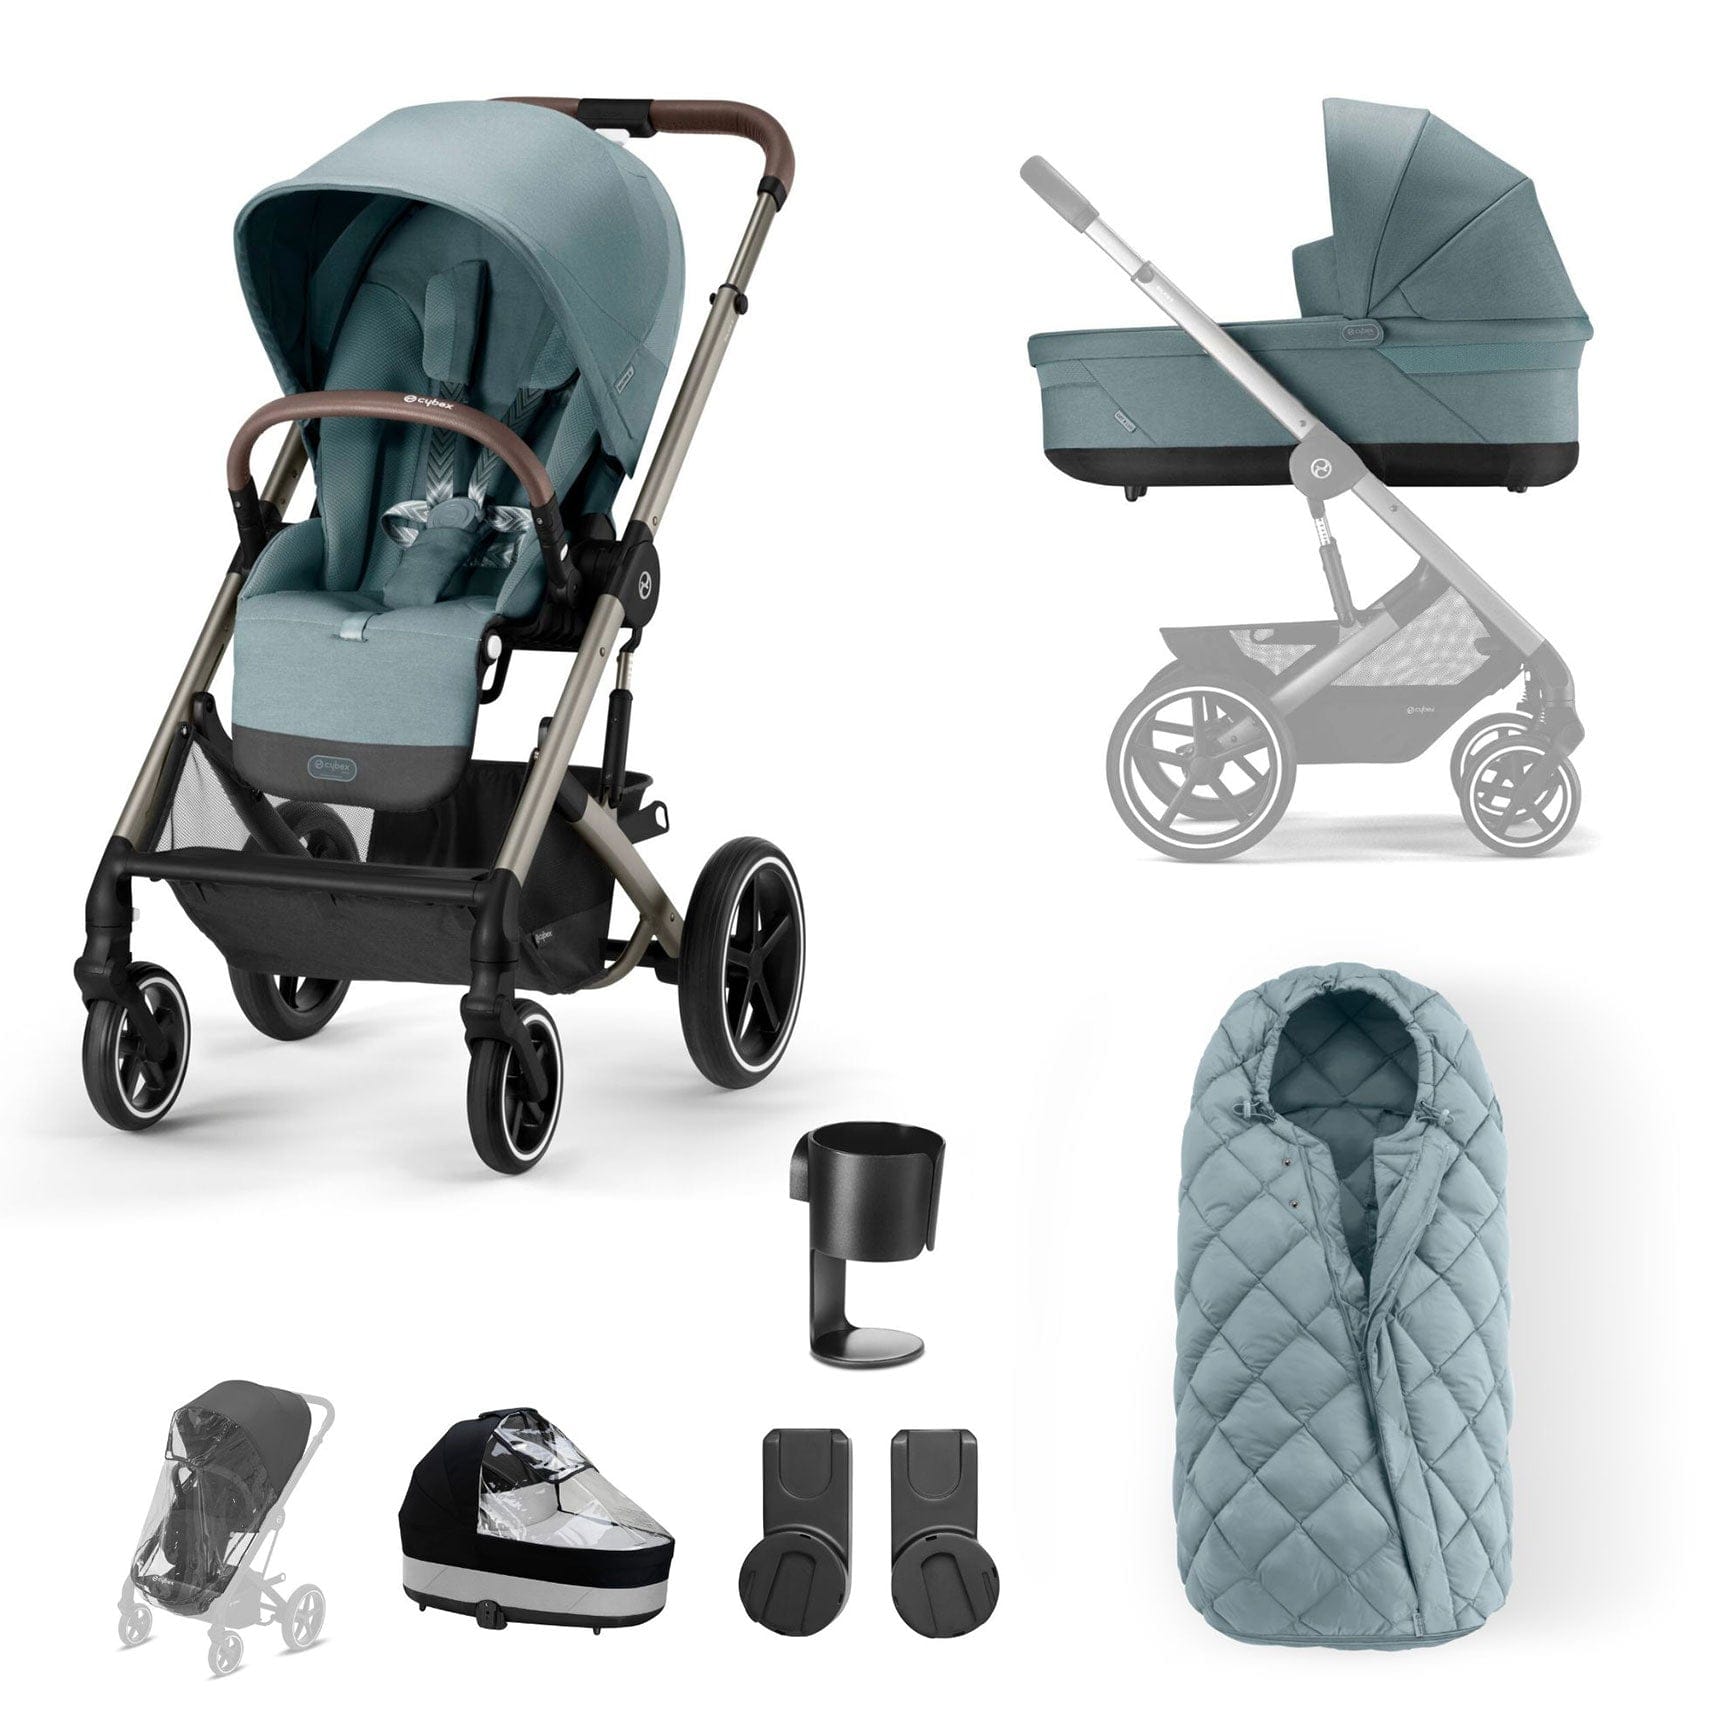 Cybex Baby Strollers Cybex Balios S Lux Essential Bundle - Taupe/Sky Blue 12753-TPE-SKY-BLU